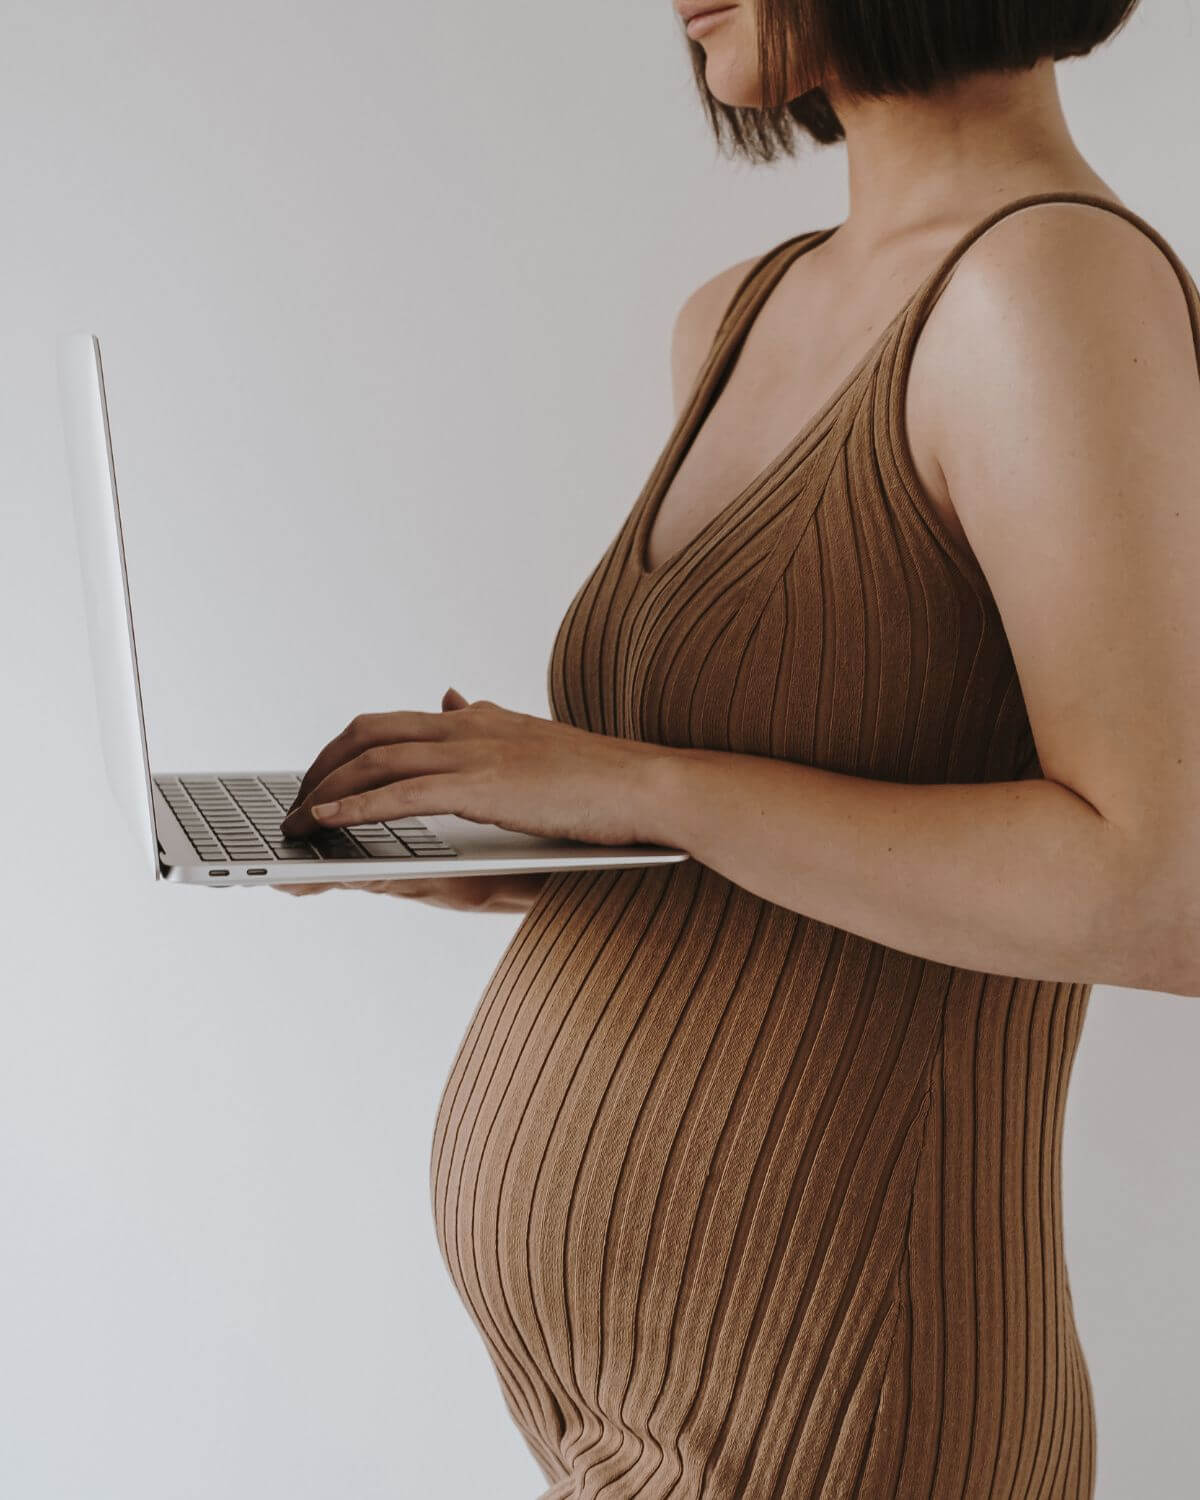 pregnant woman holding a laptop